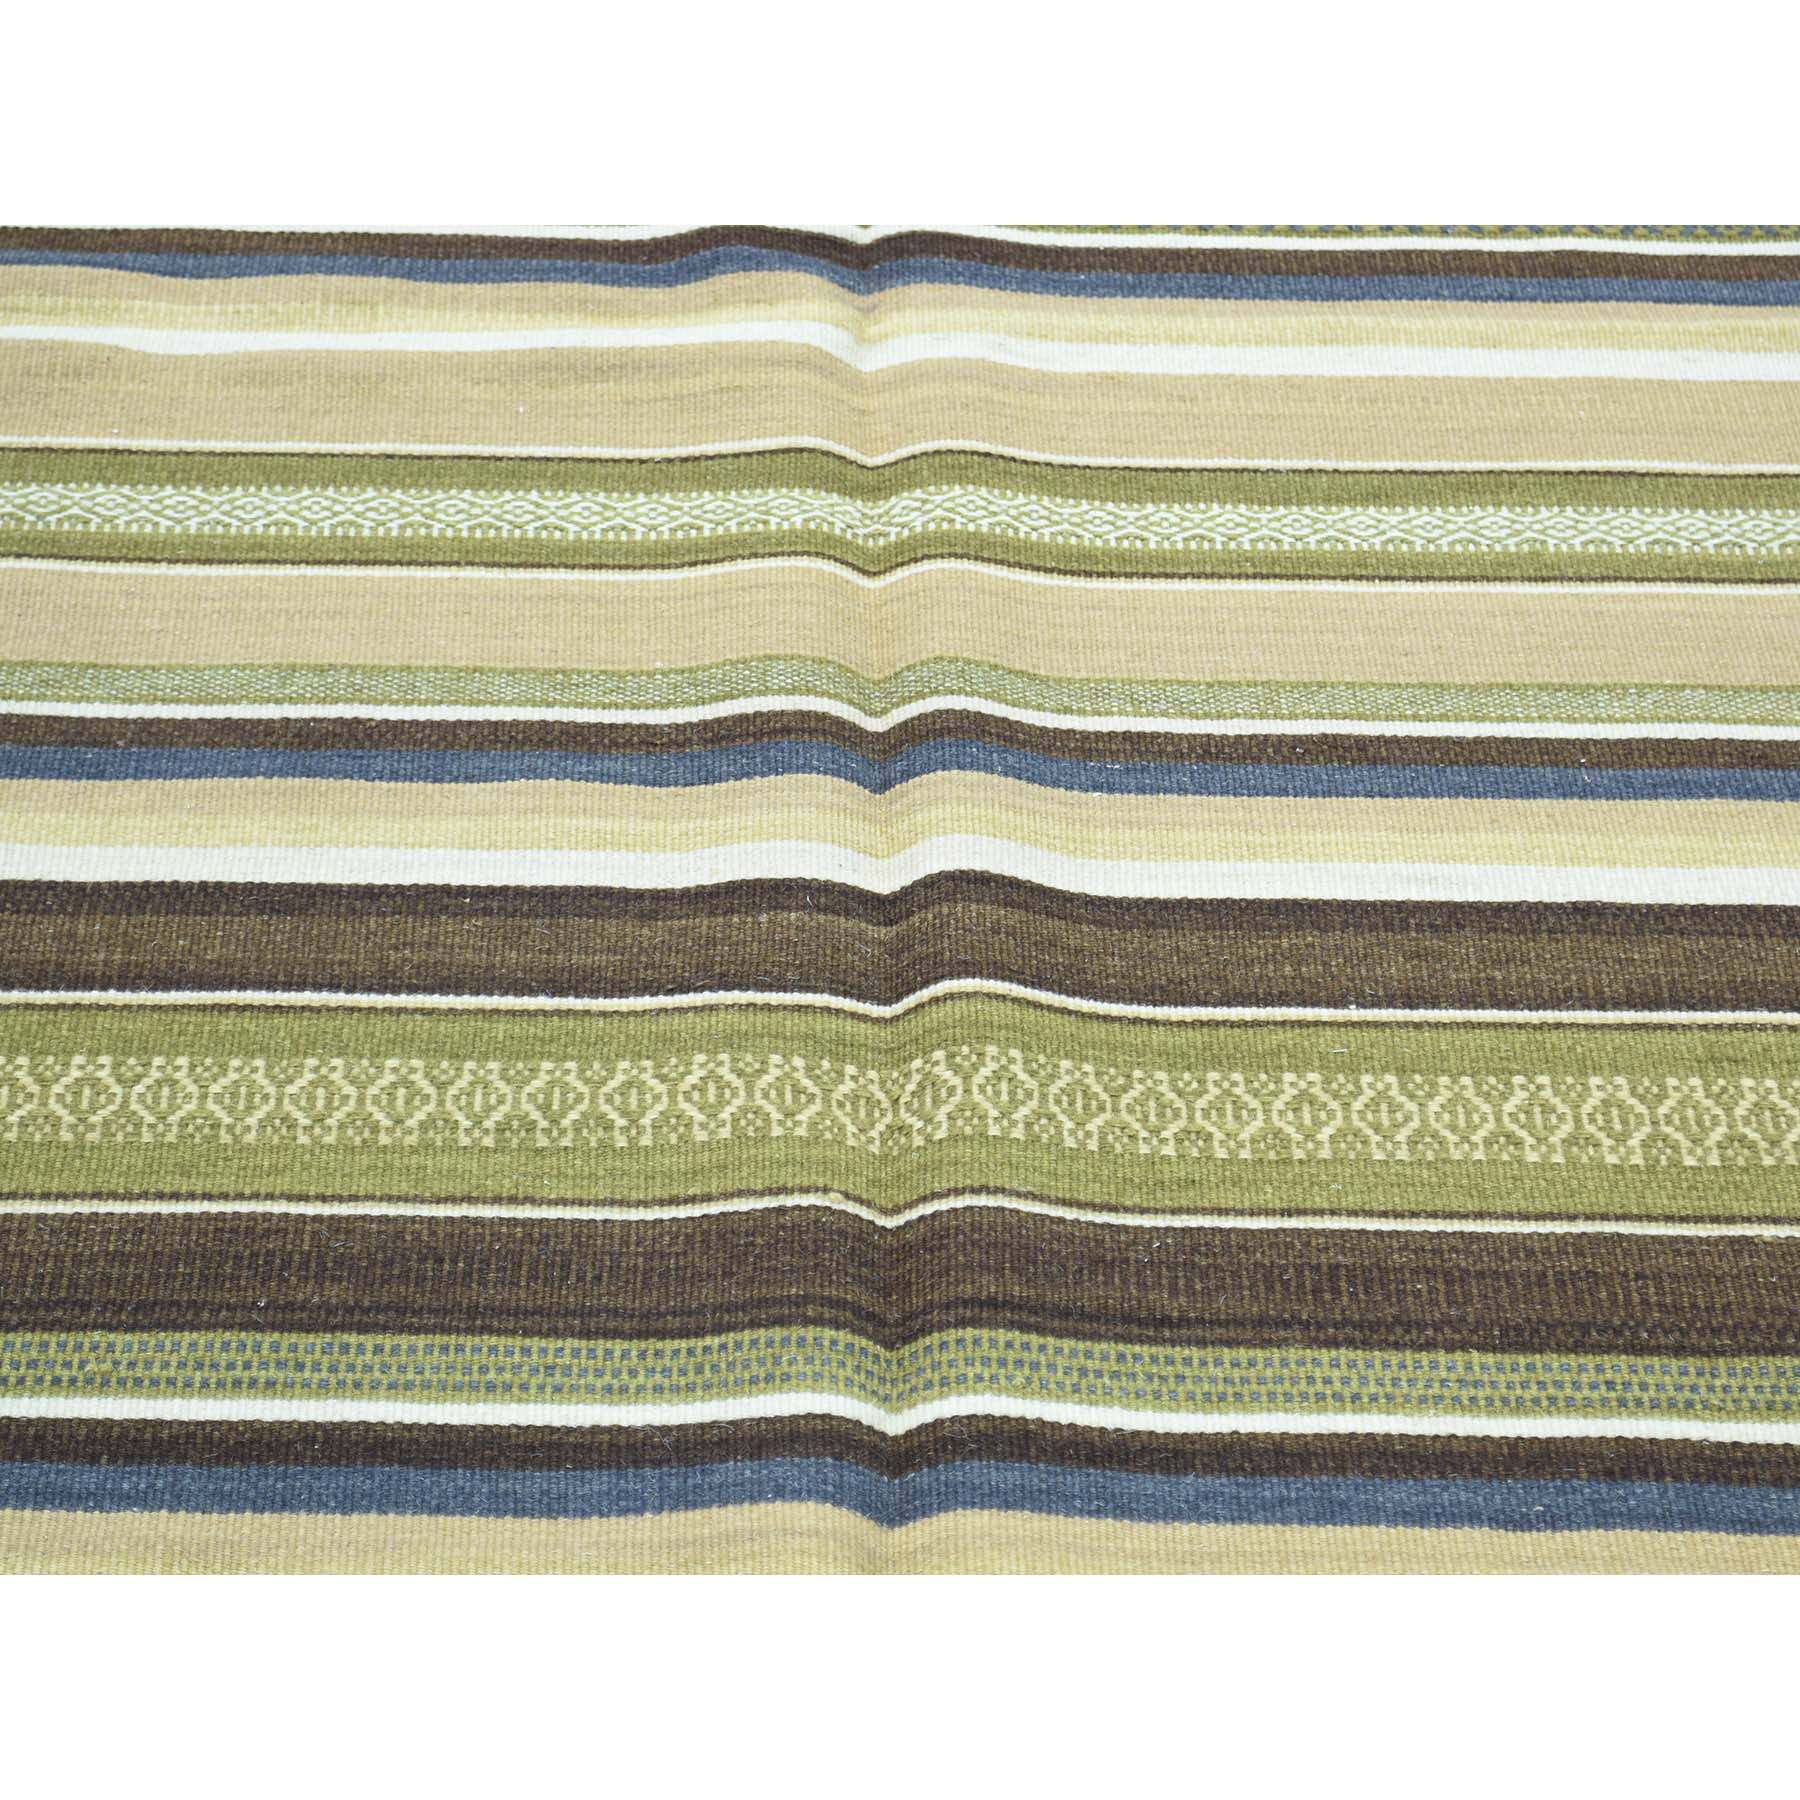 5-6 x7-9  Flat Weave Hand-Woven Reversible Pure Wool Striped Kilim Rug 